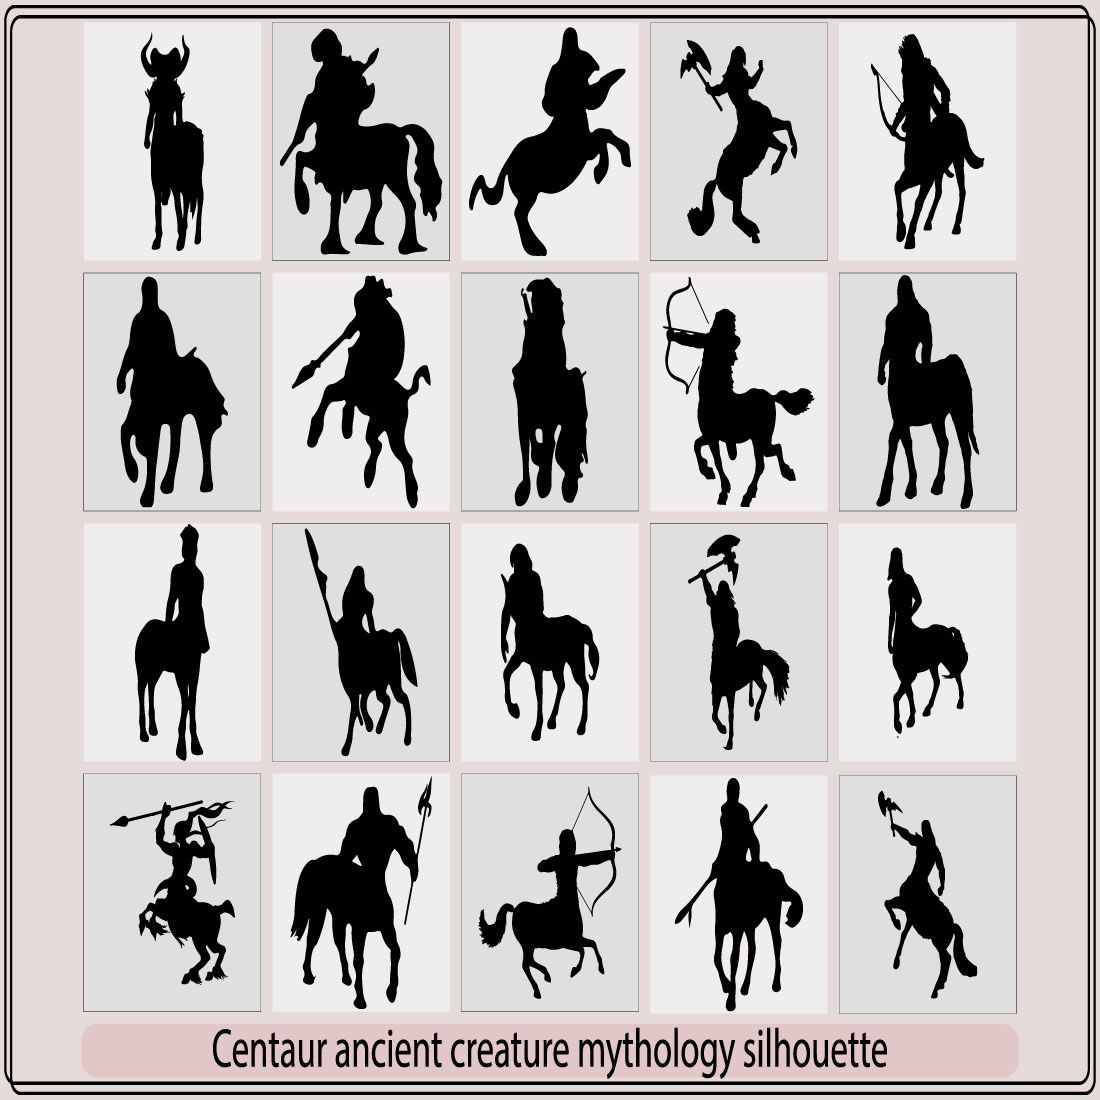 Centaur ancient creature mythology silhouette preview image.